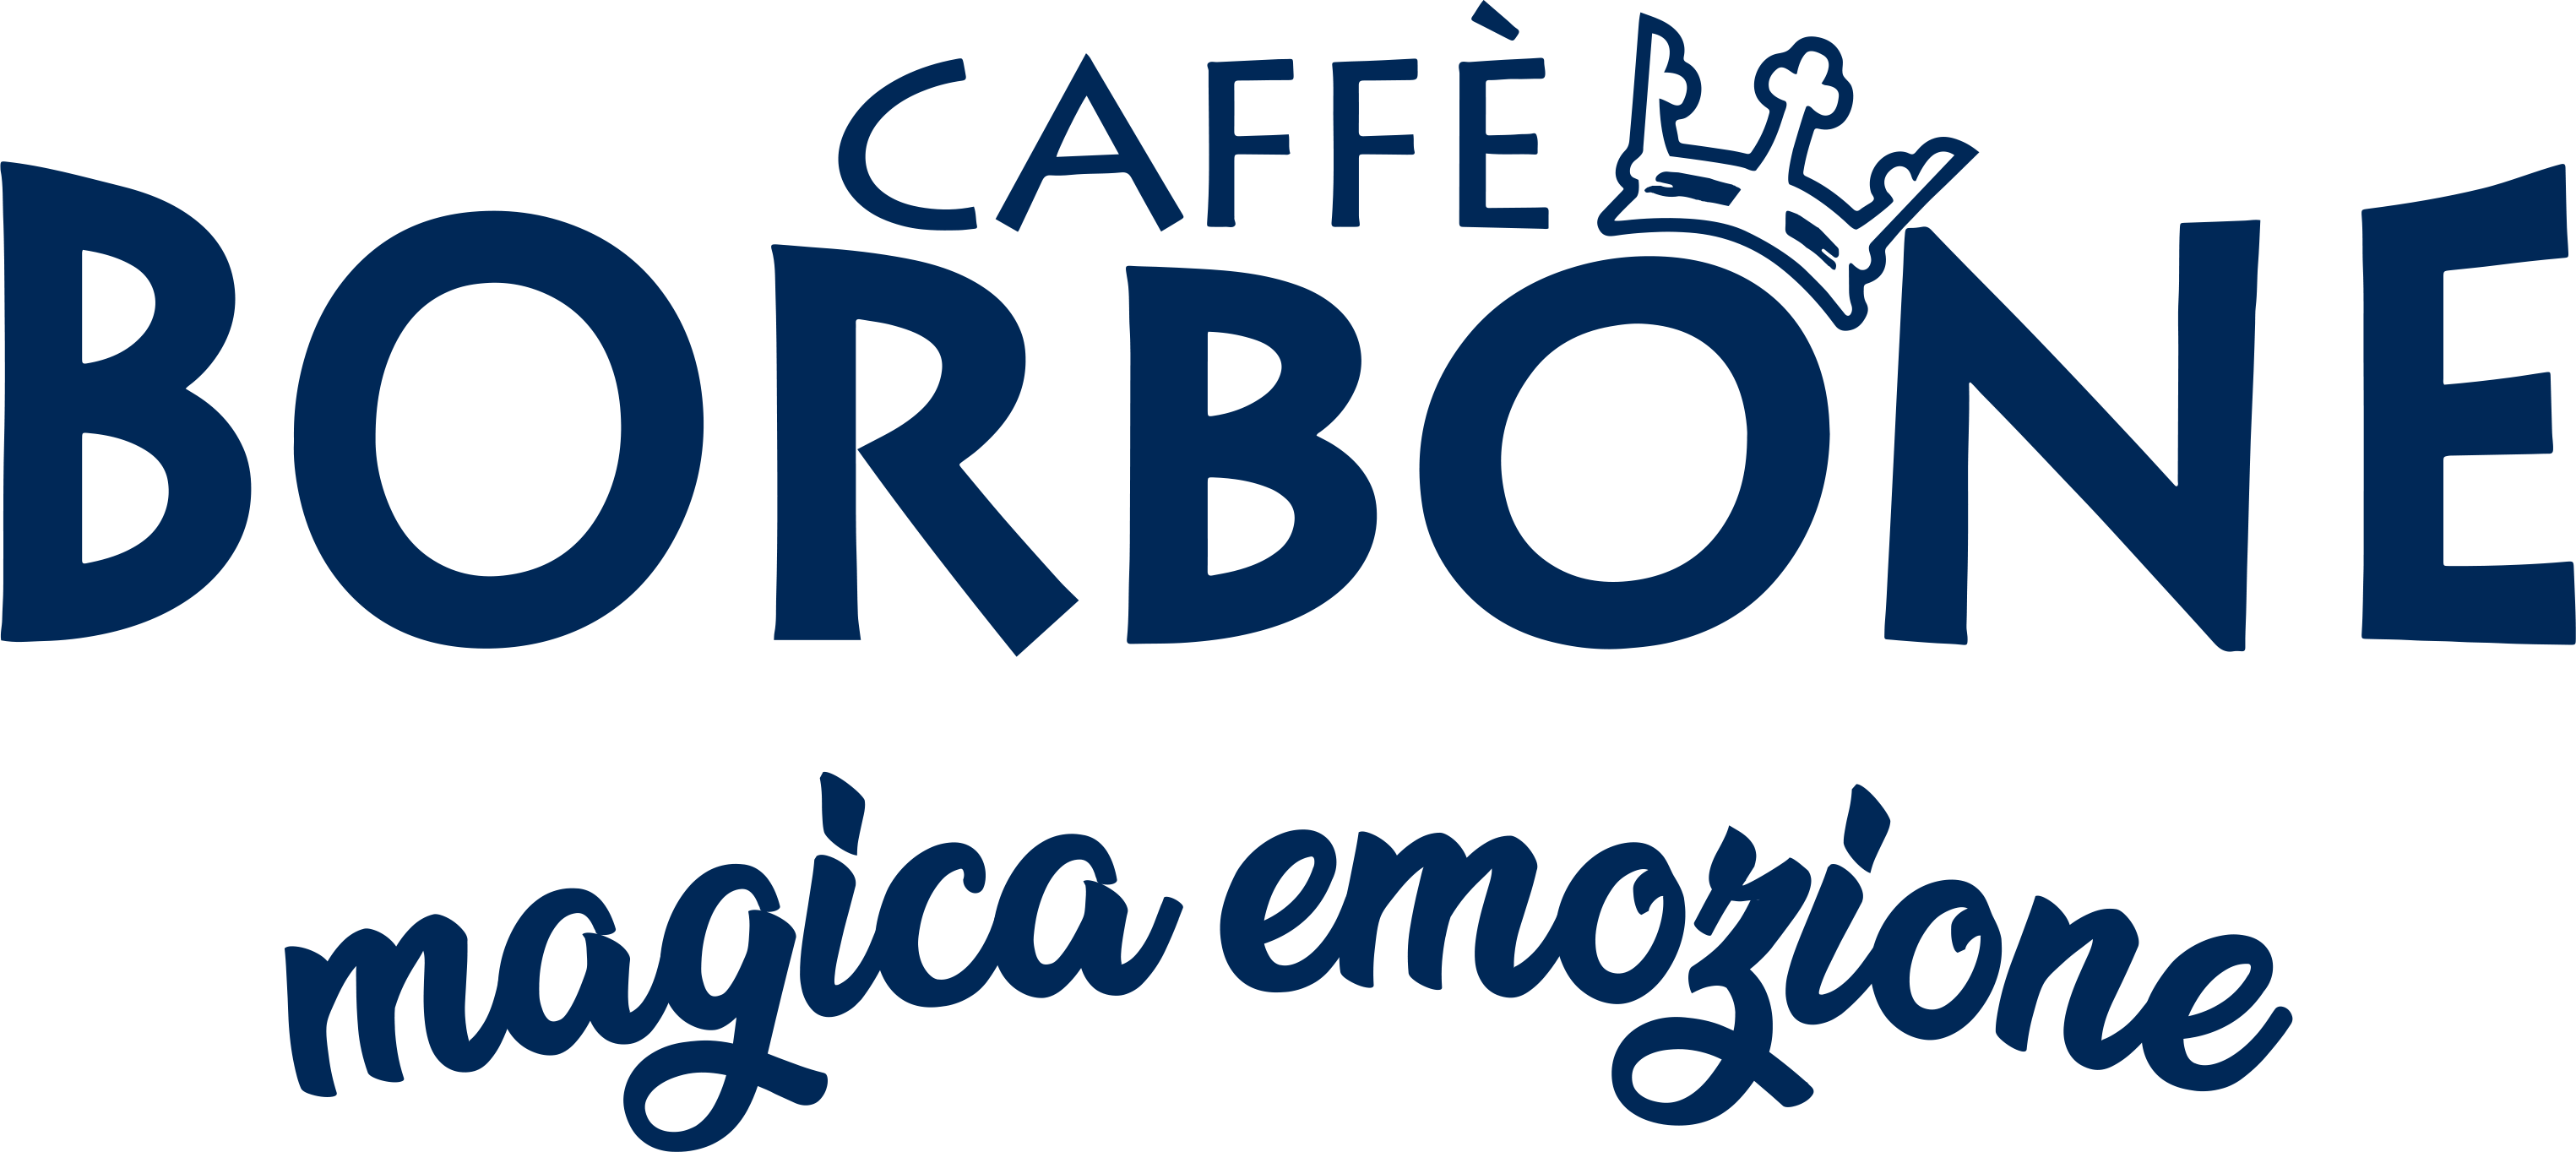 Passione caffè | logo caffè borbone